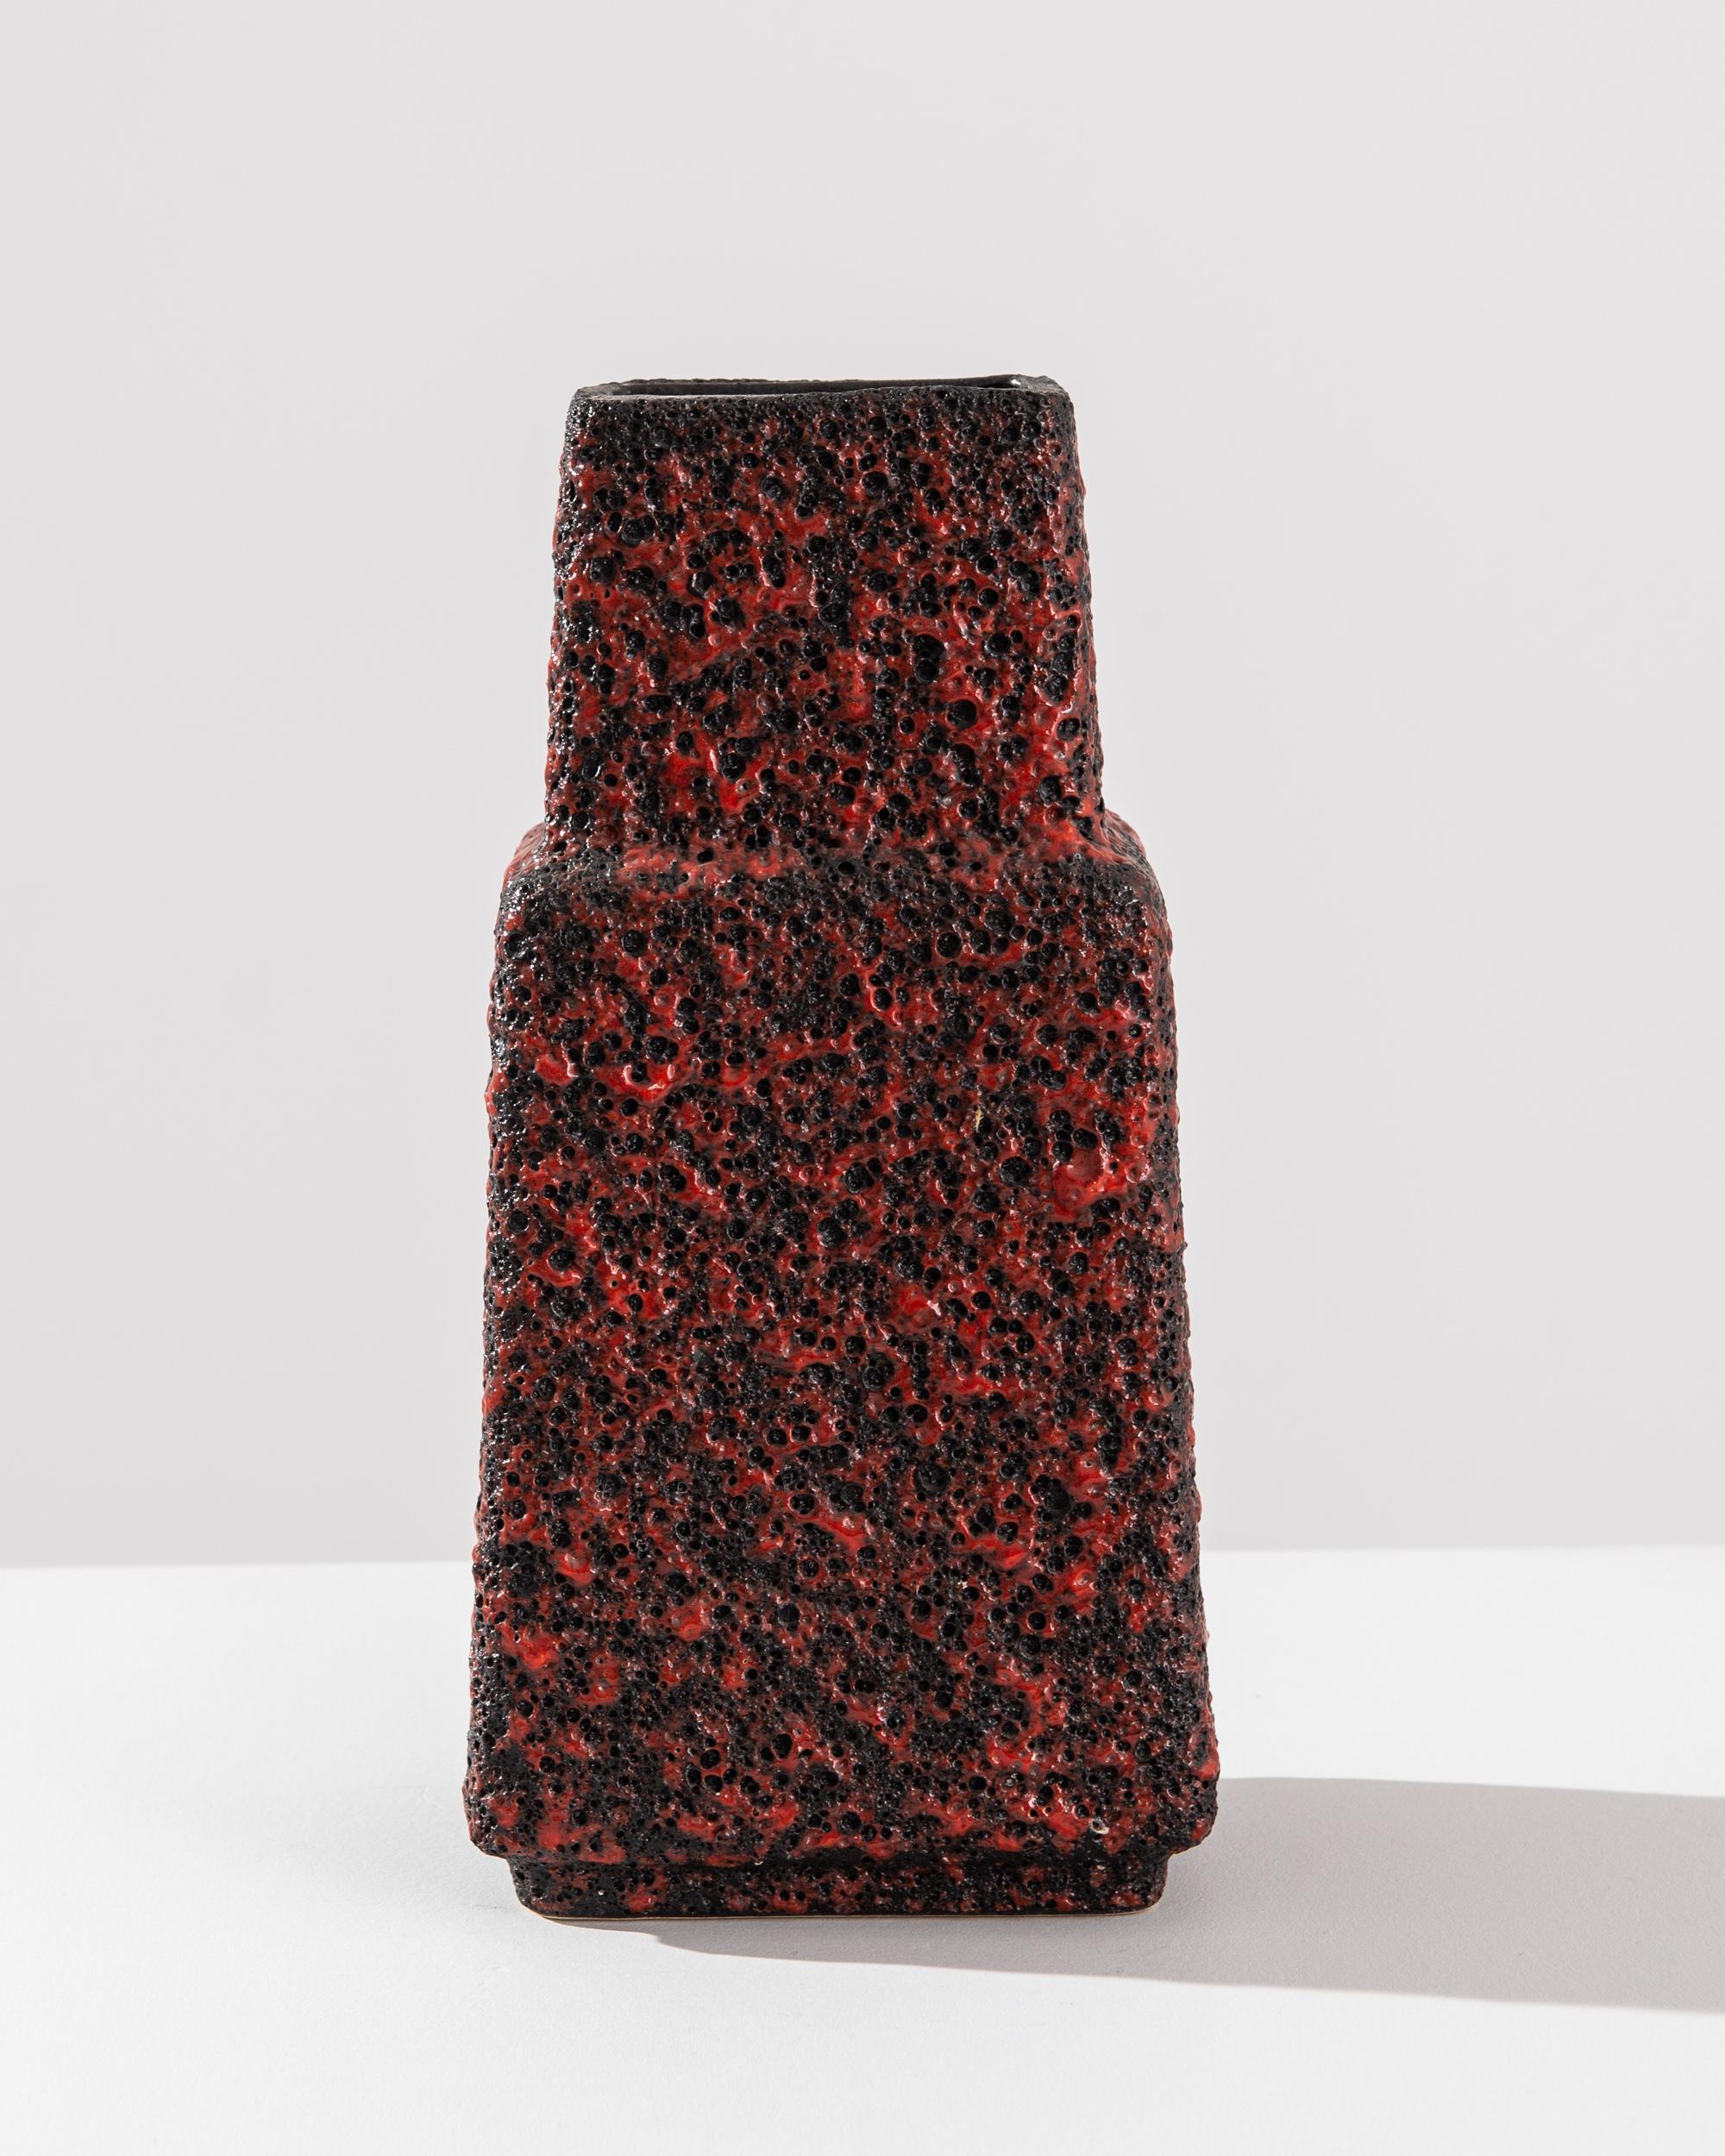 1960s Mid-Century Modern German Lava Glaze Vase For Sale 1